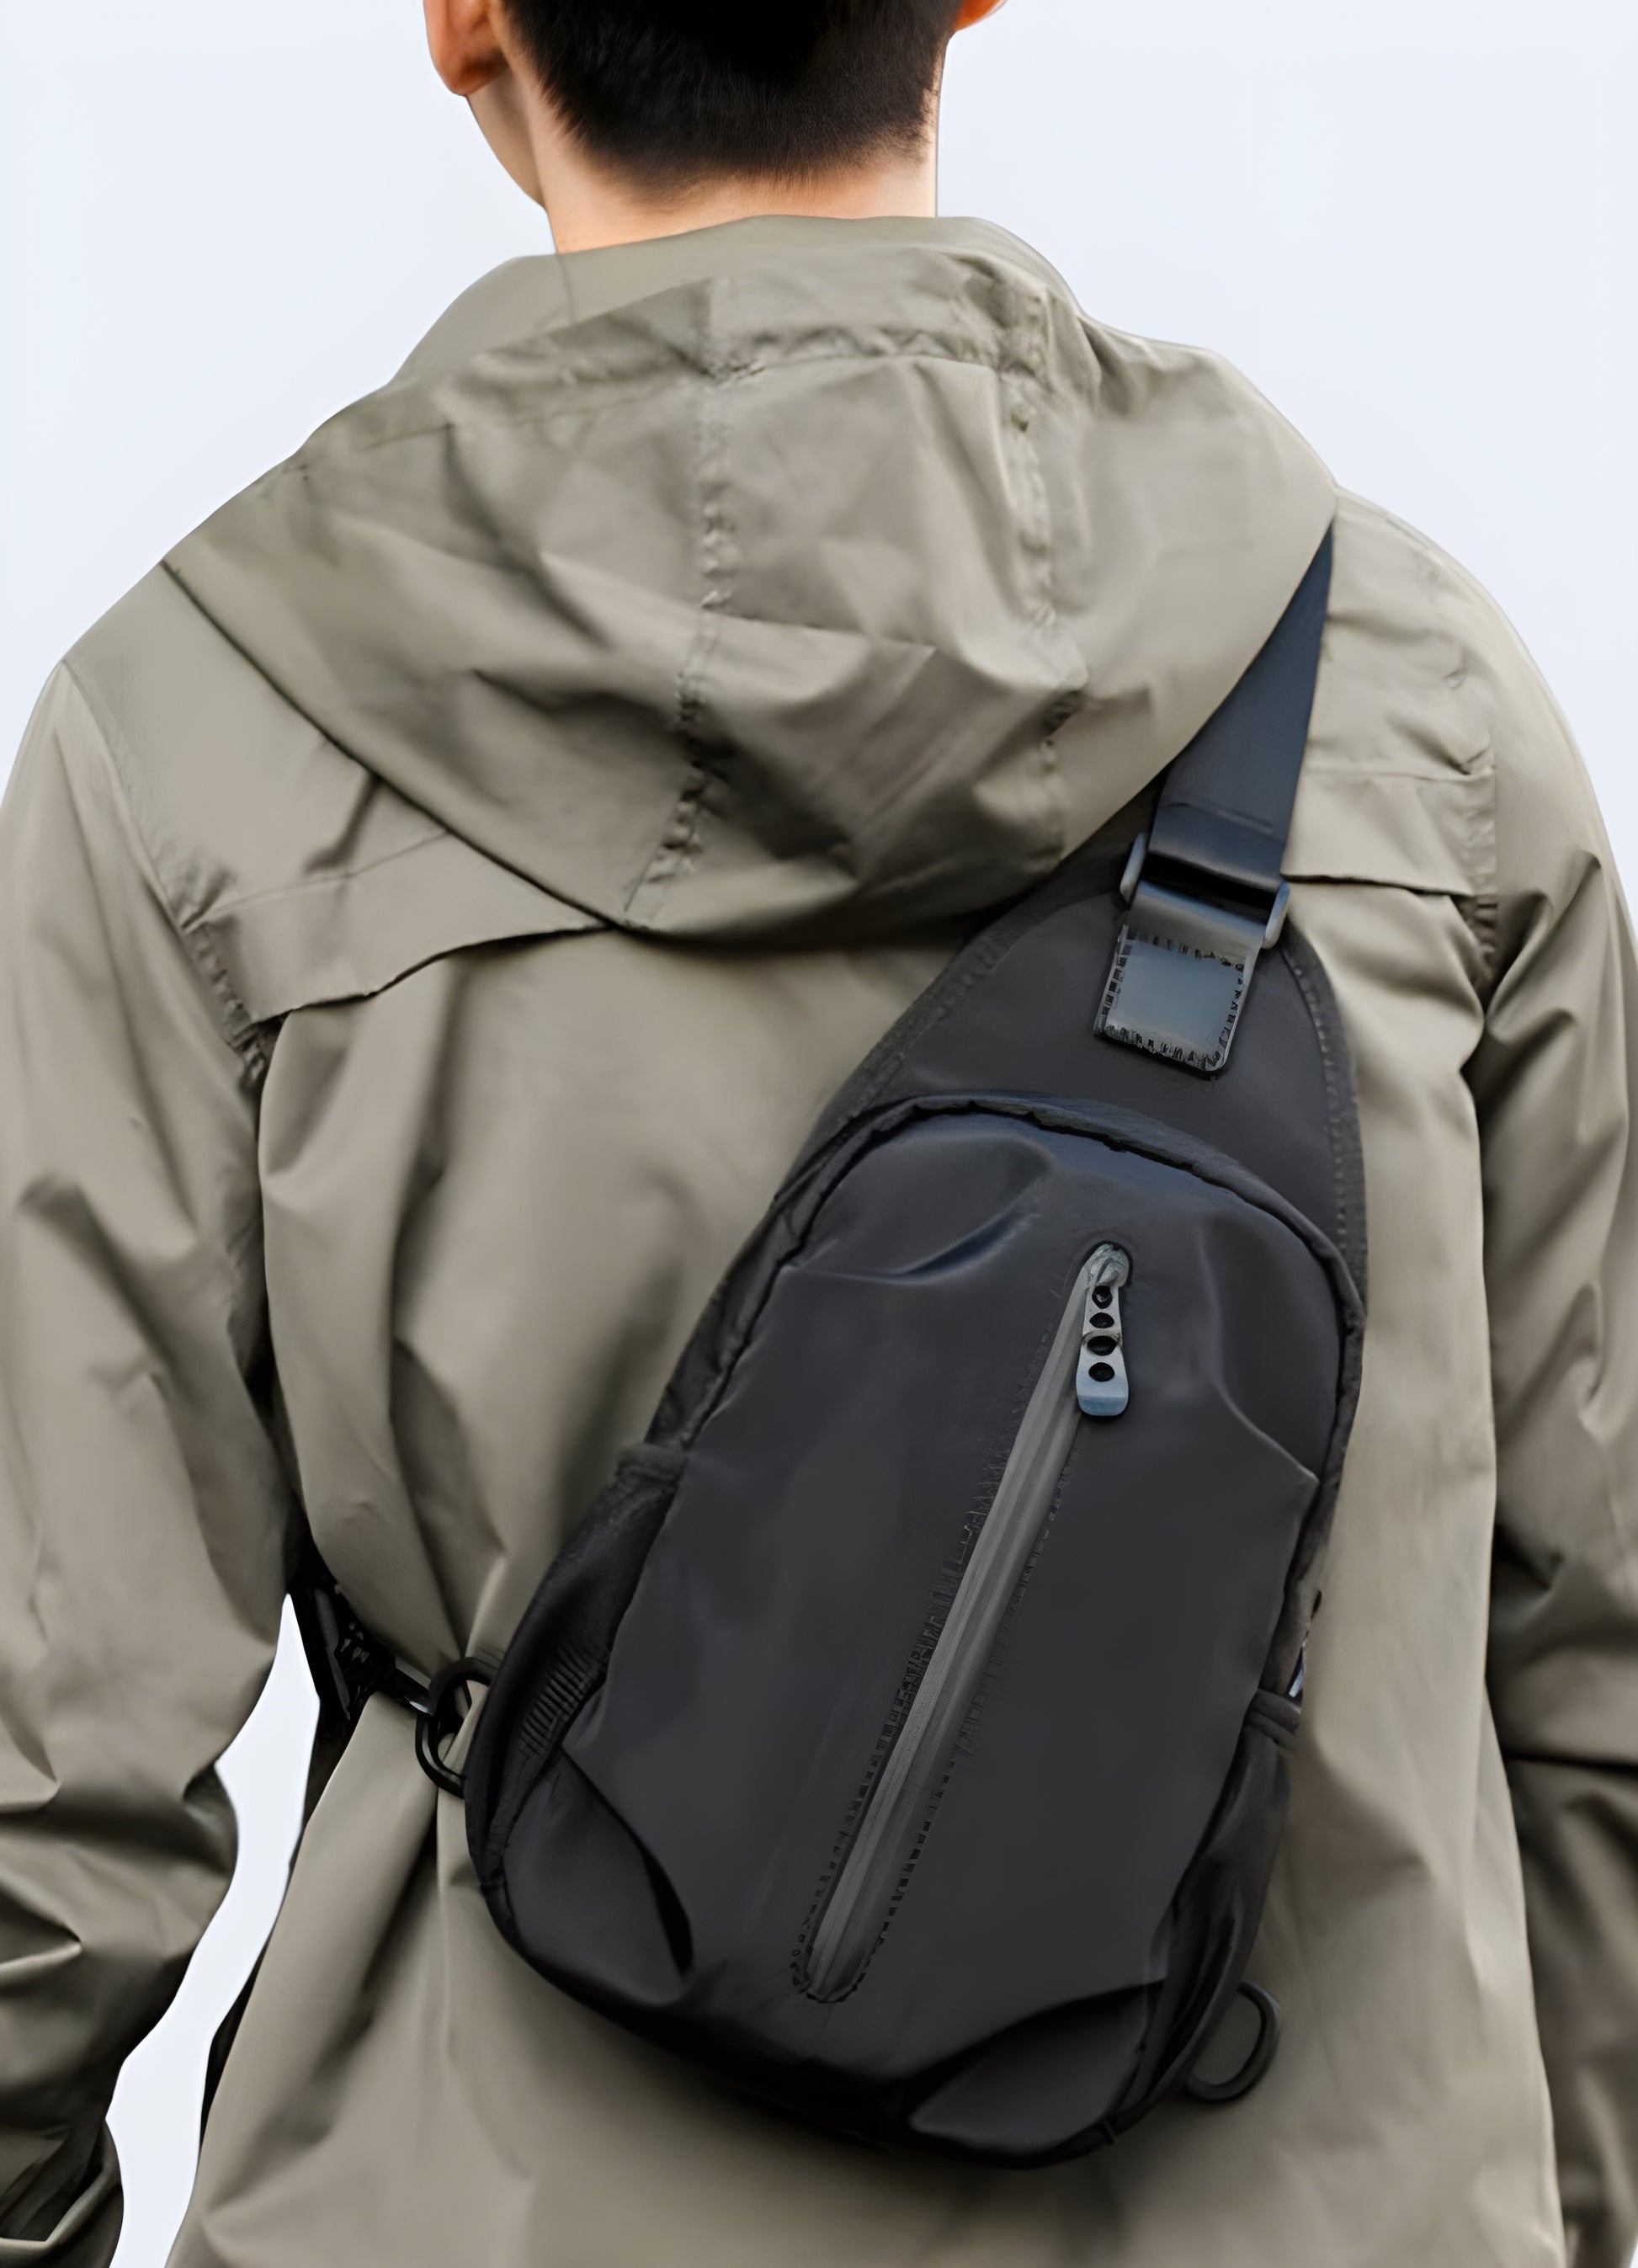 Padded, adjustable strap minimalist sling bag secure foldover closure.